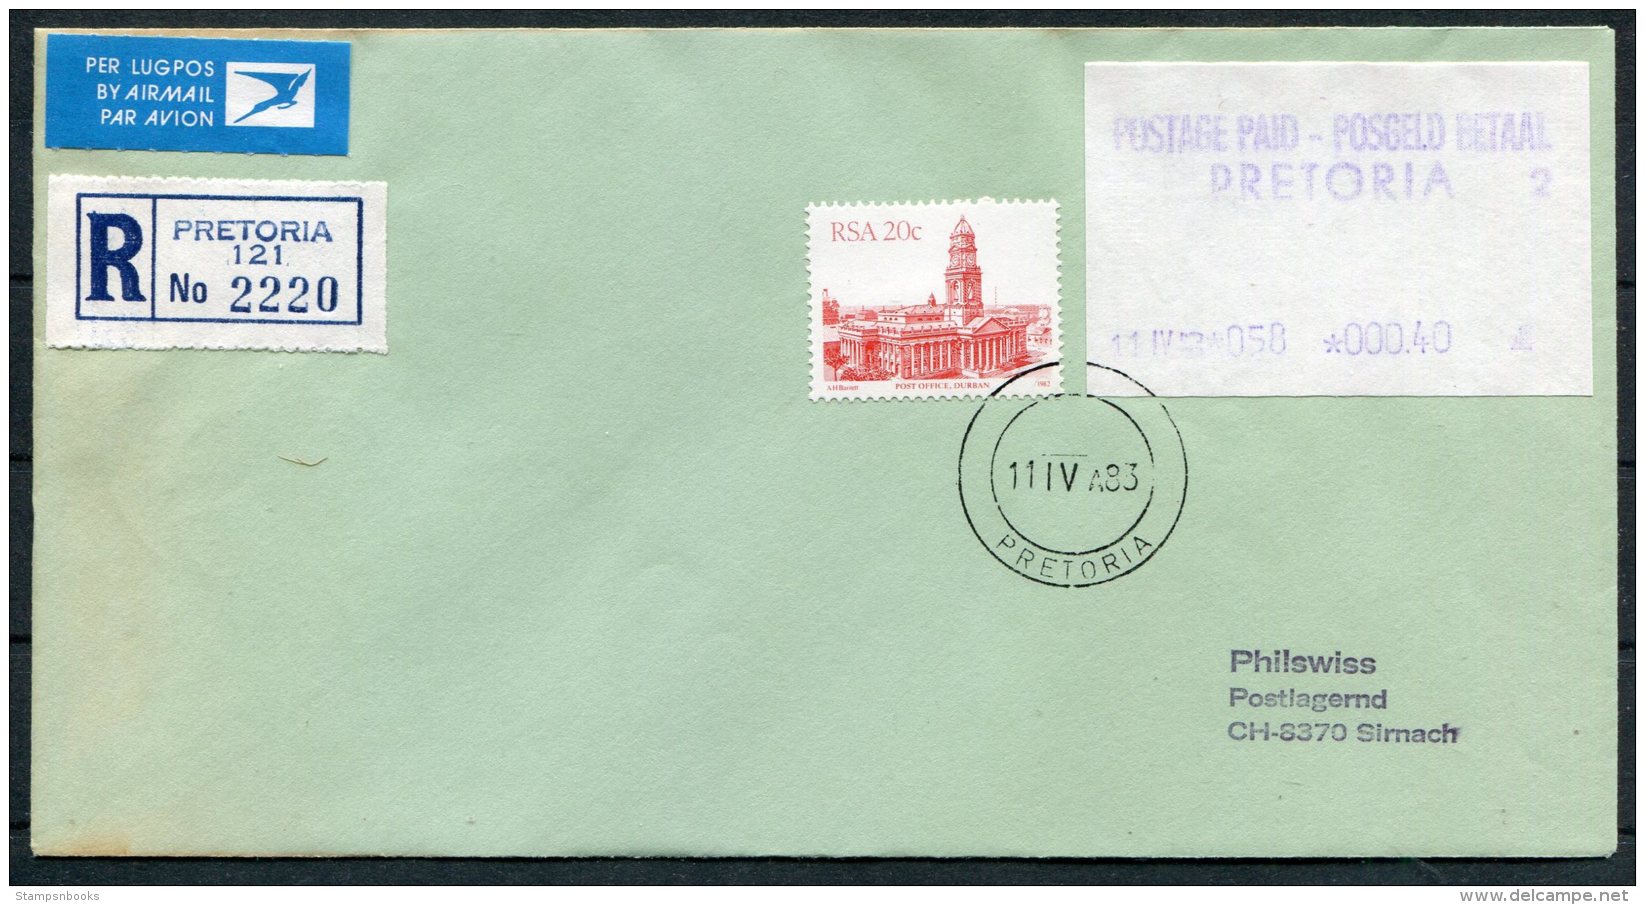 1983 South Africa Automatenmarke 2 X Postage Prepaid / Posgeld Betaal Pretoria Airmail Covers (1 Registered) - Viñetas De Franqueo (Frama)